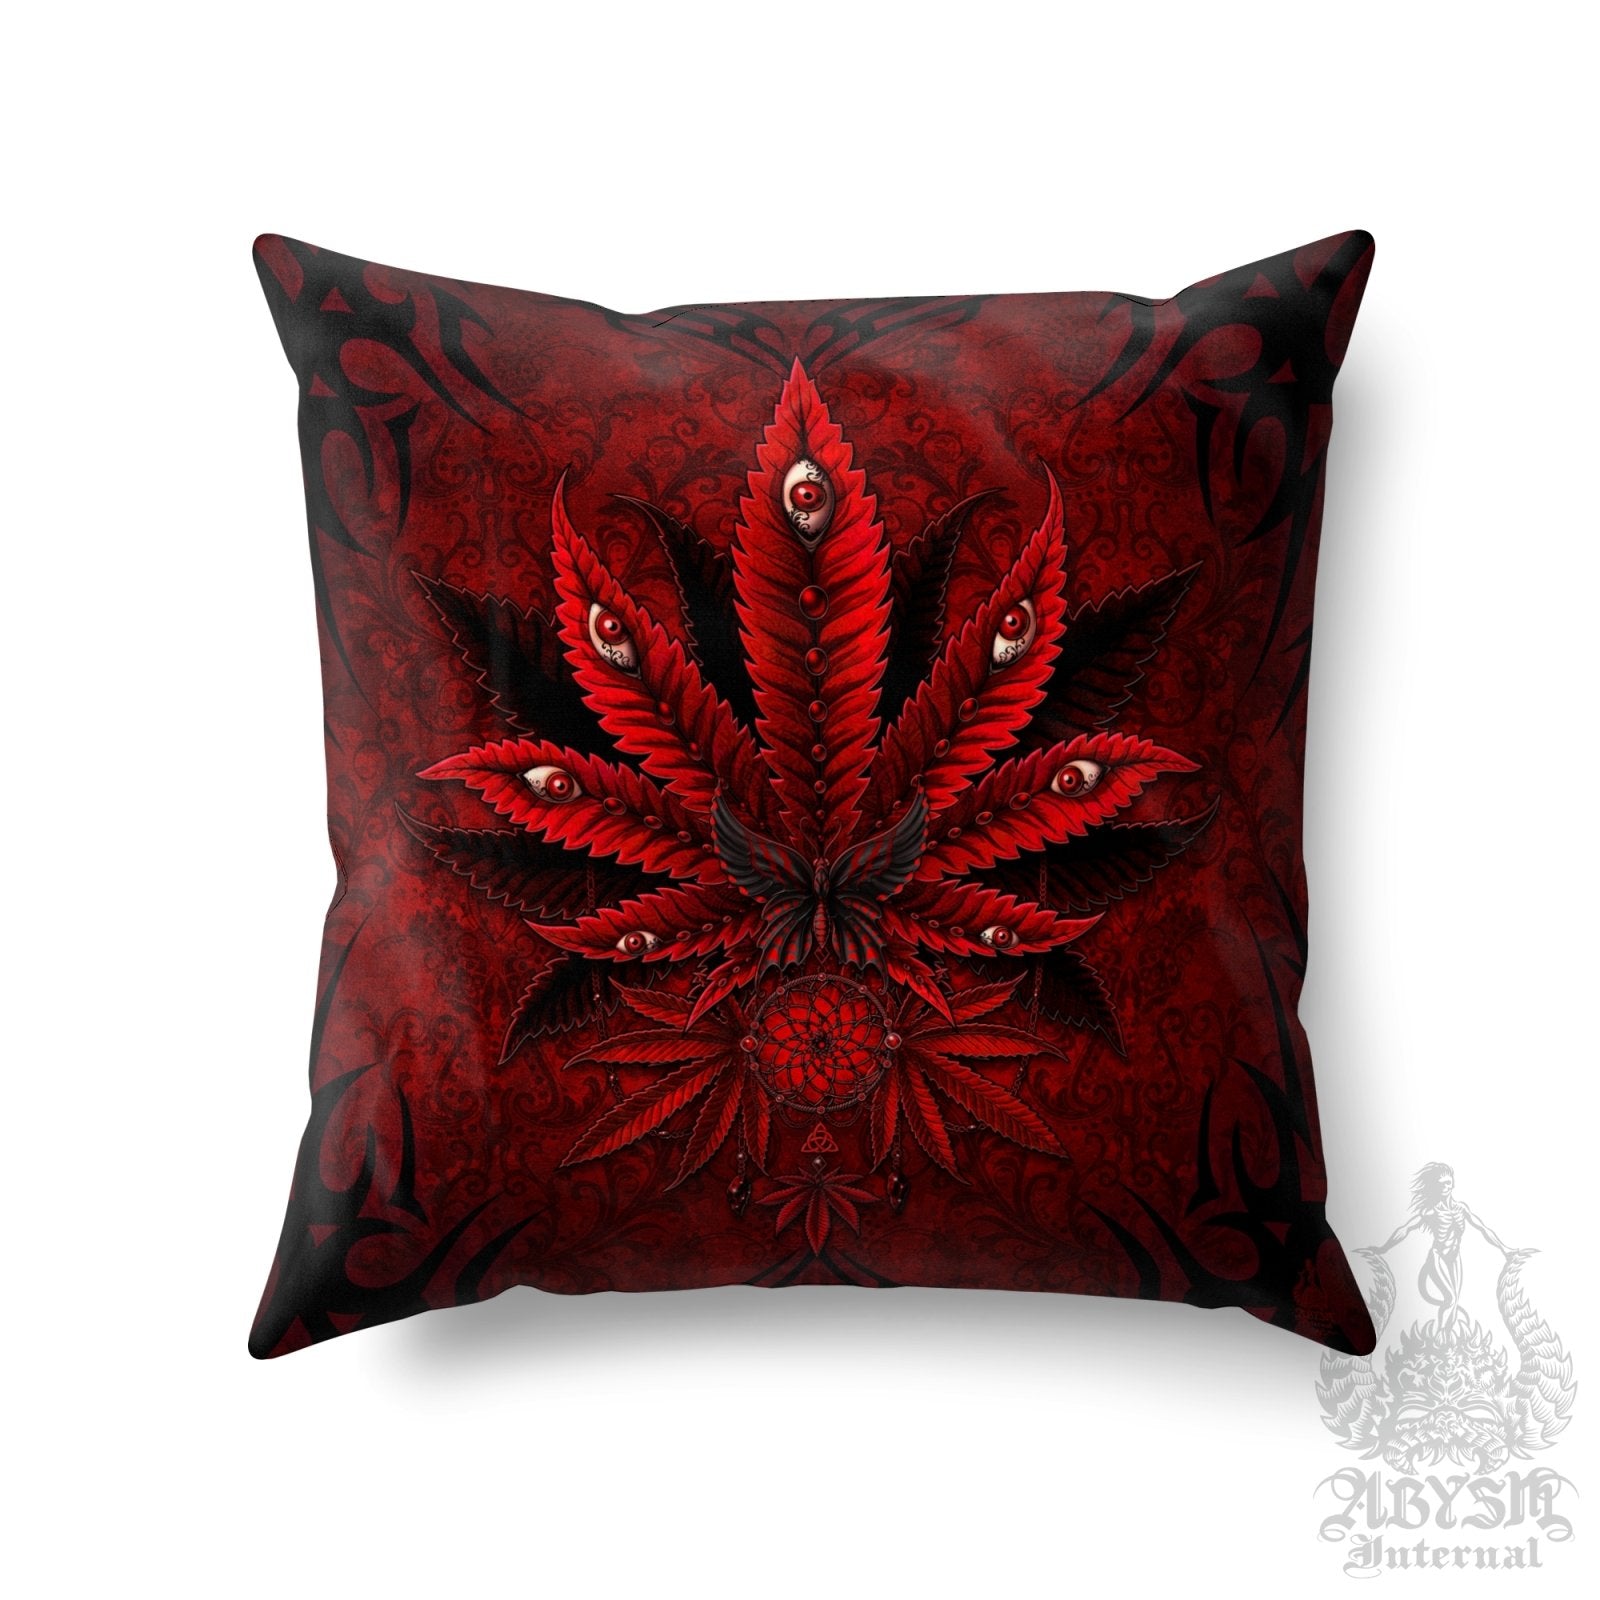 Gothic Weed Throw Pillow, Cannabis Shop Decor, Decorative Accent Cushion, Alternative Room Decor, 420 Art Print - Bloody Goth - Abysm Internal